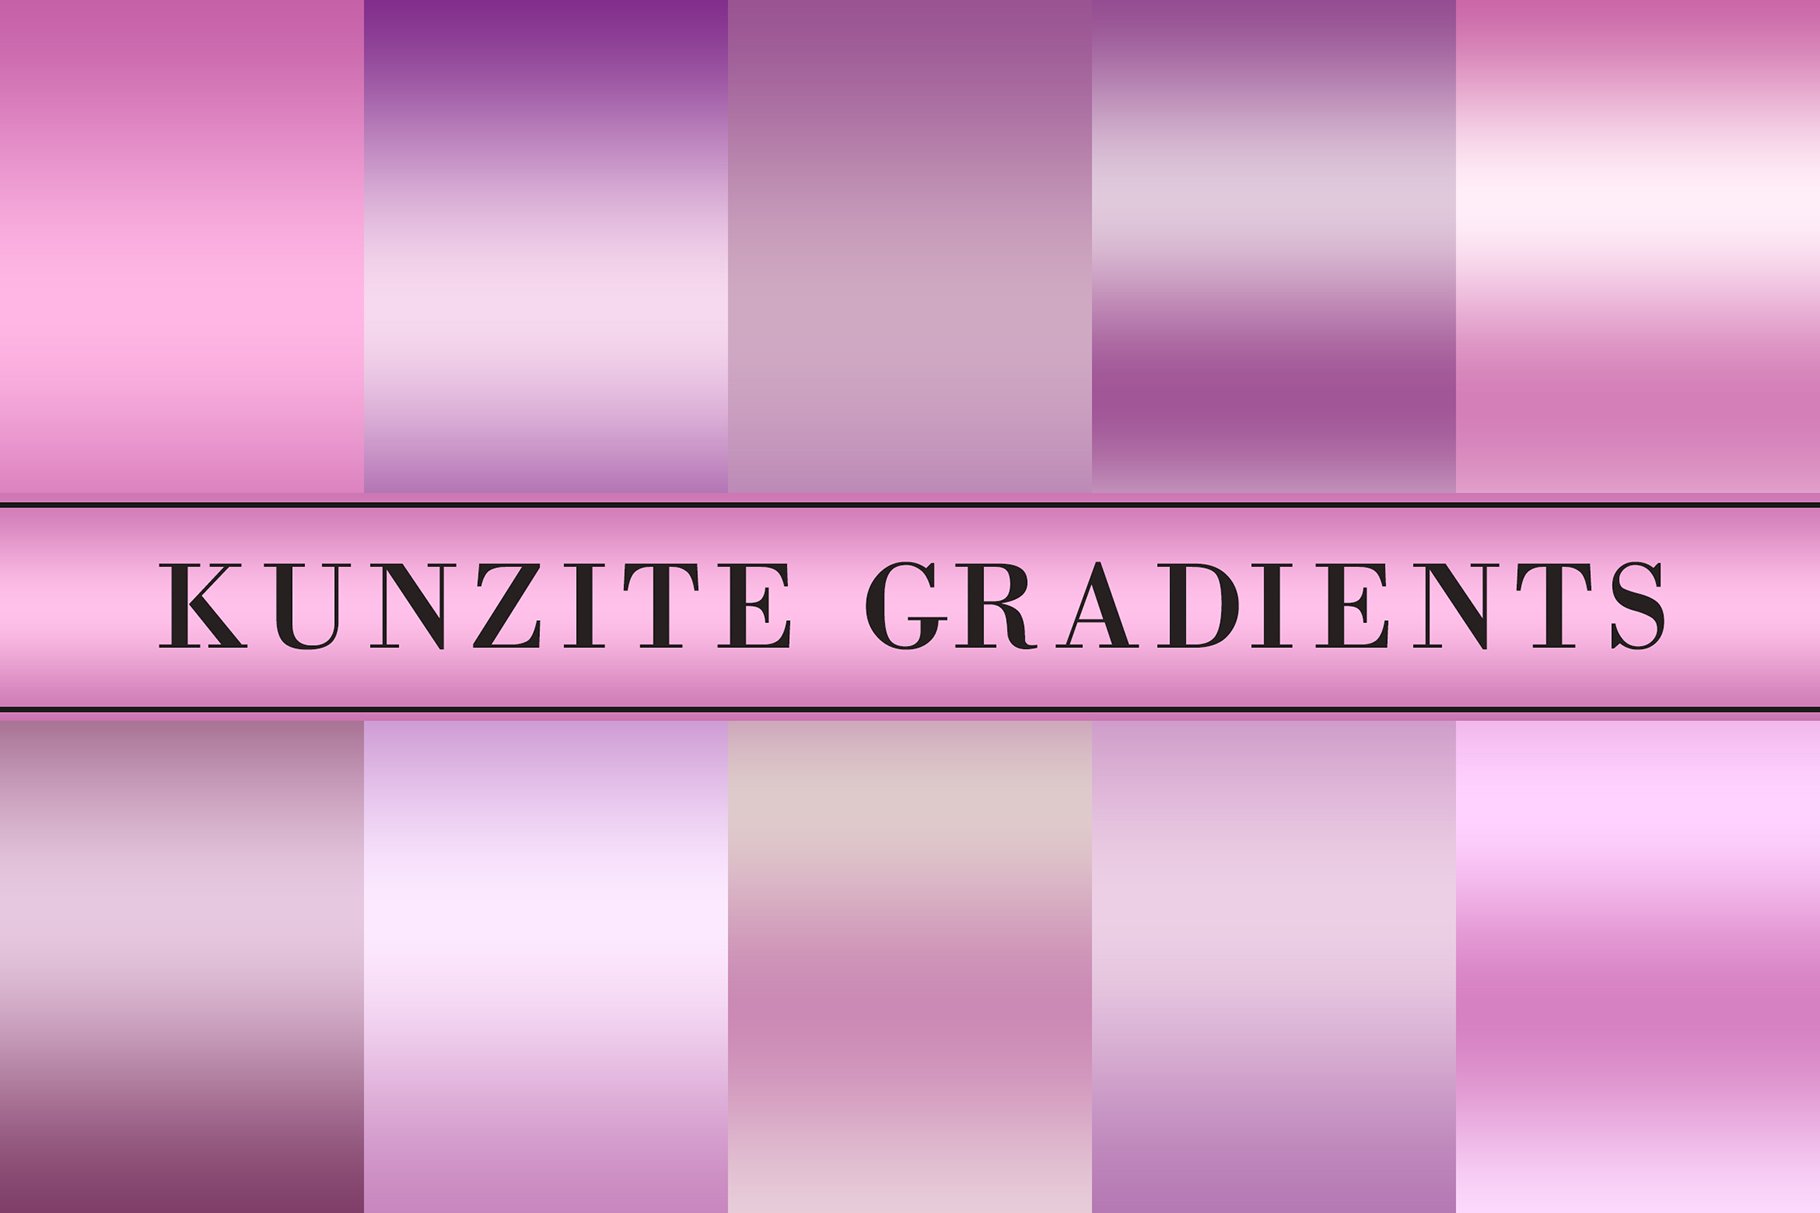 Kunzite Gradients cover image.